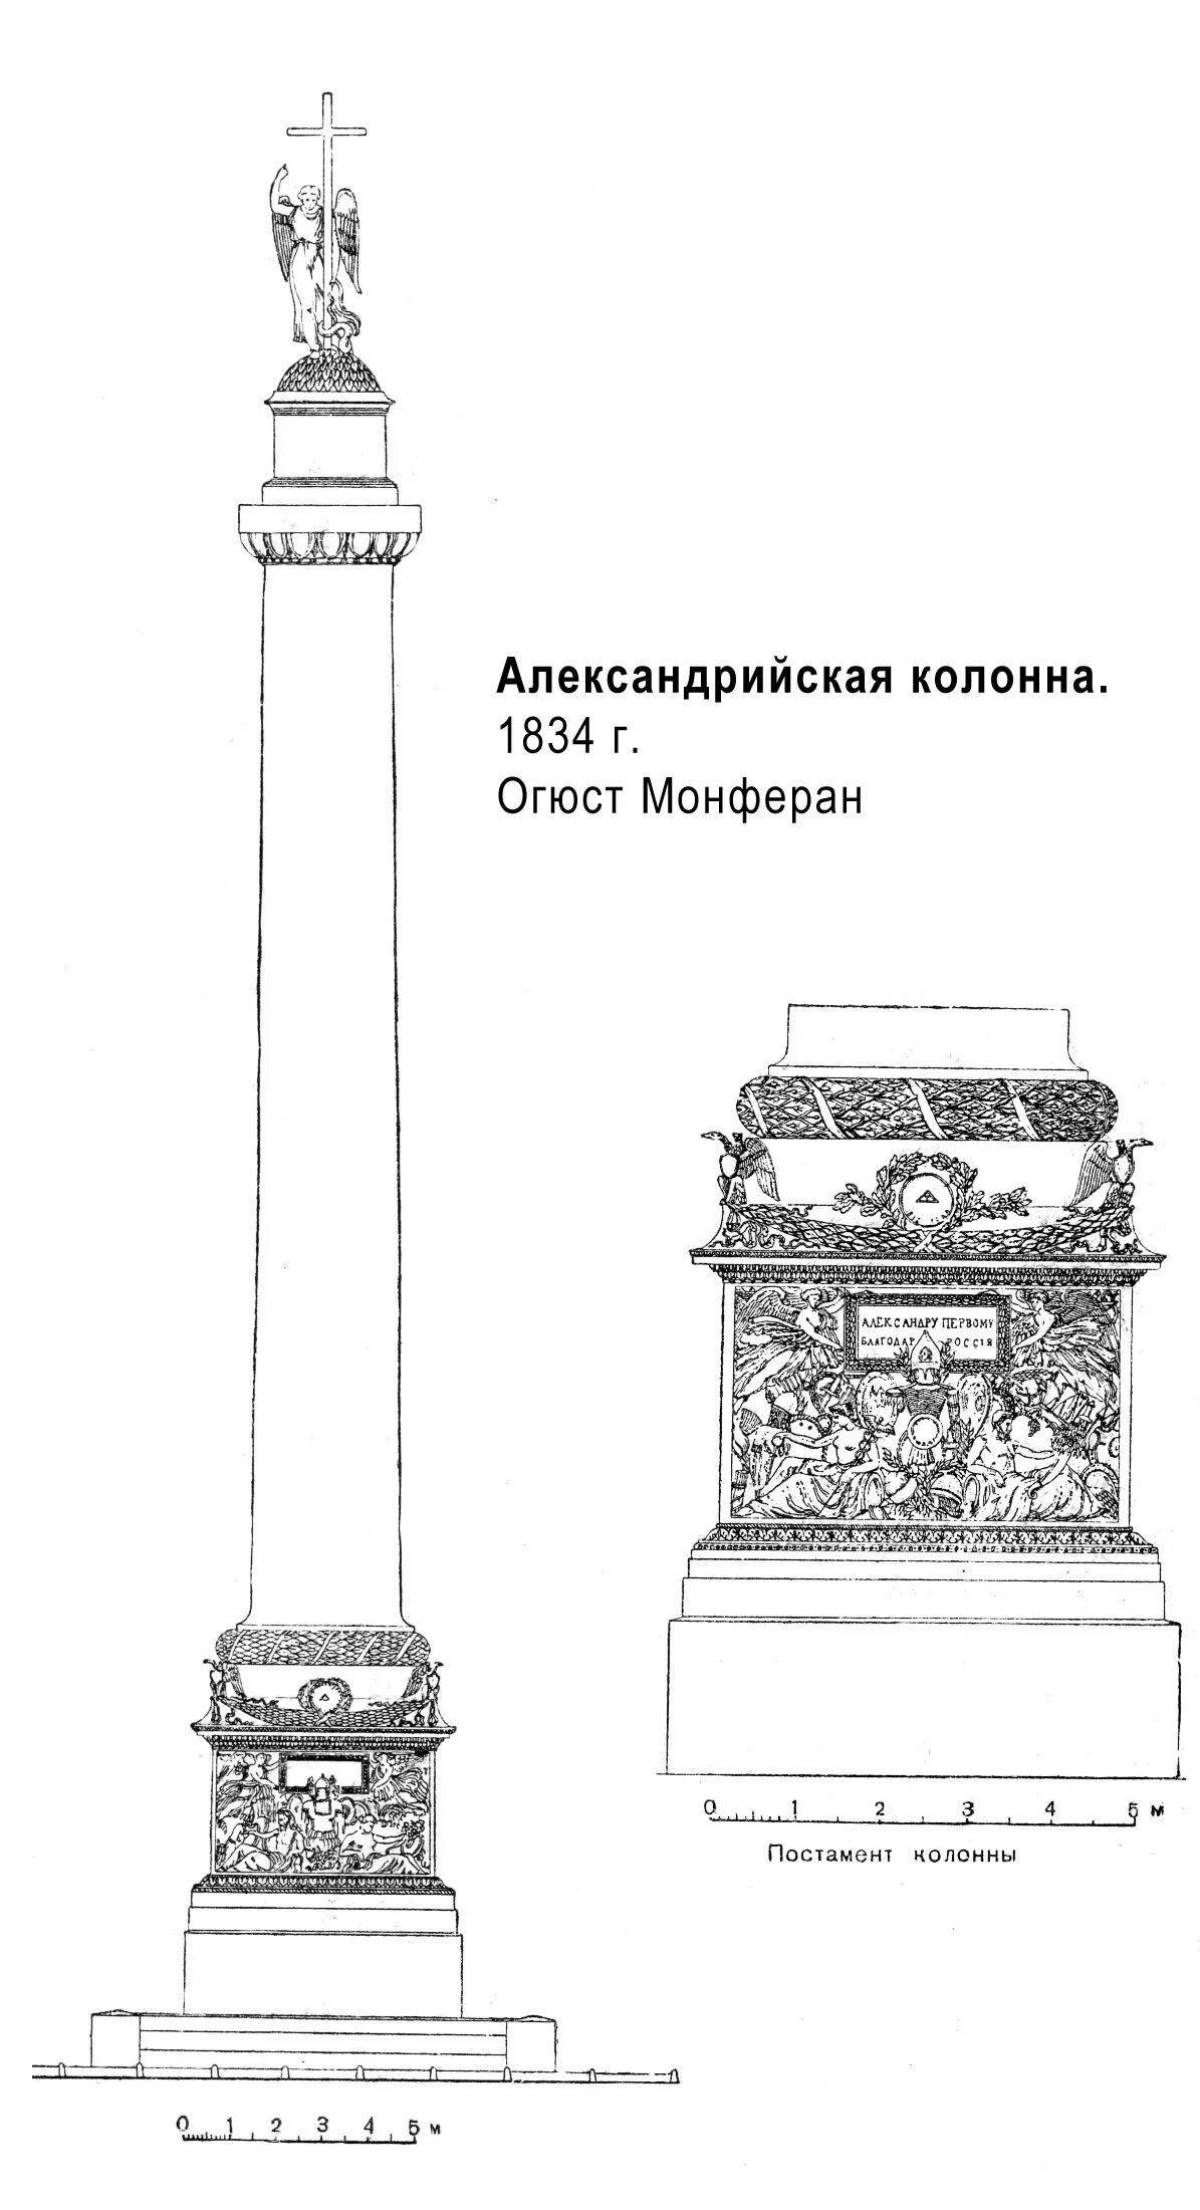 Александровская колонна в Санкт-Петербурге чертеж